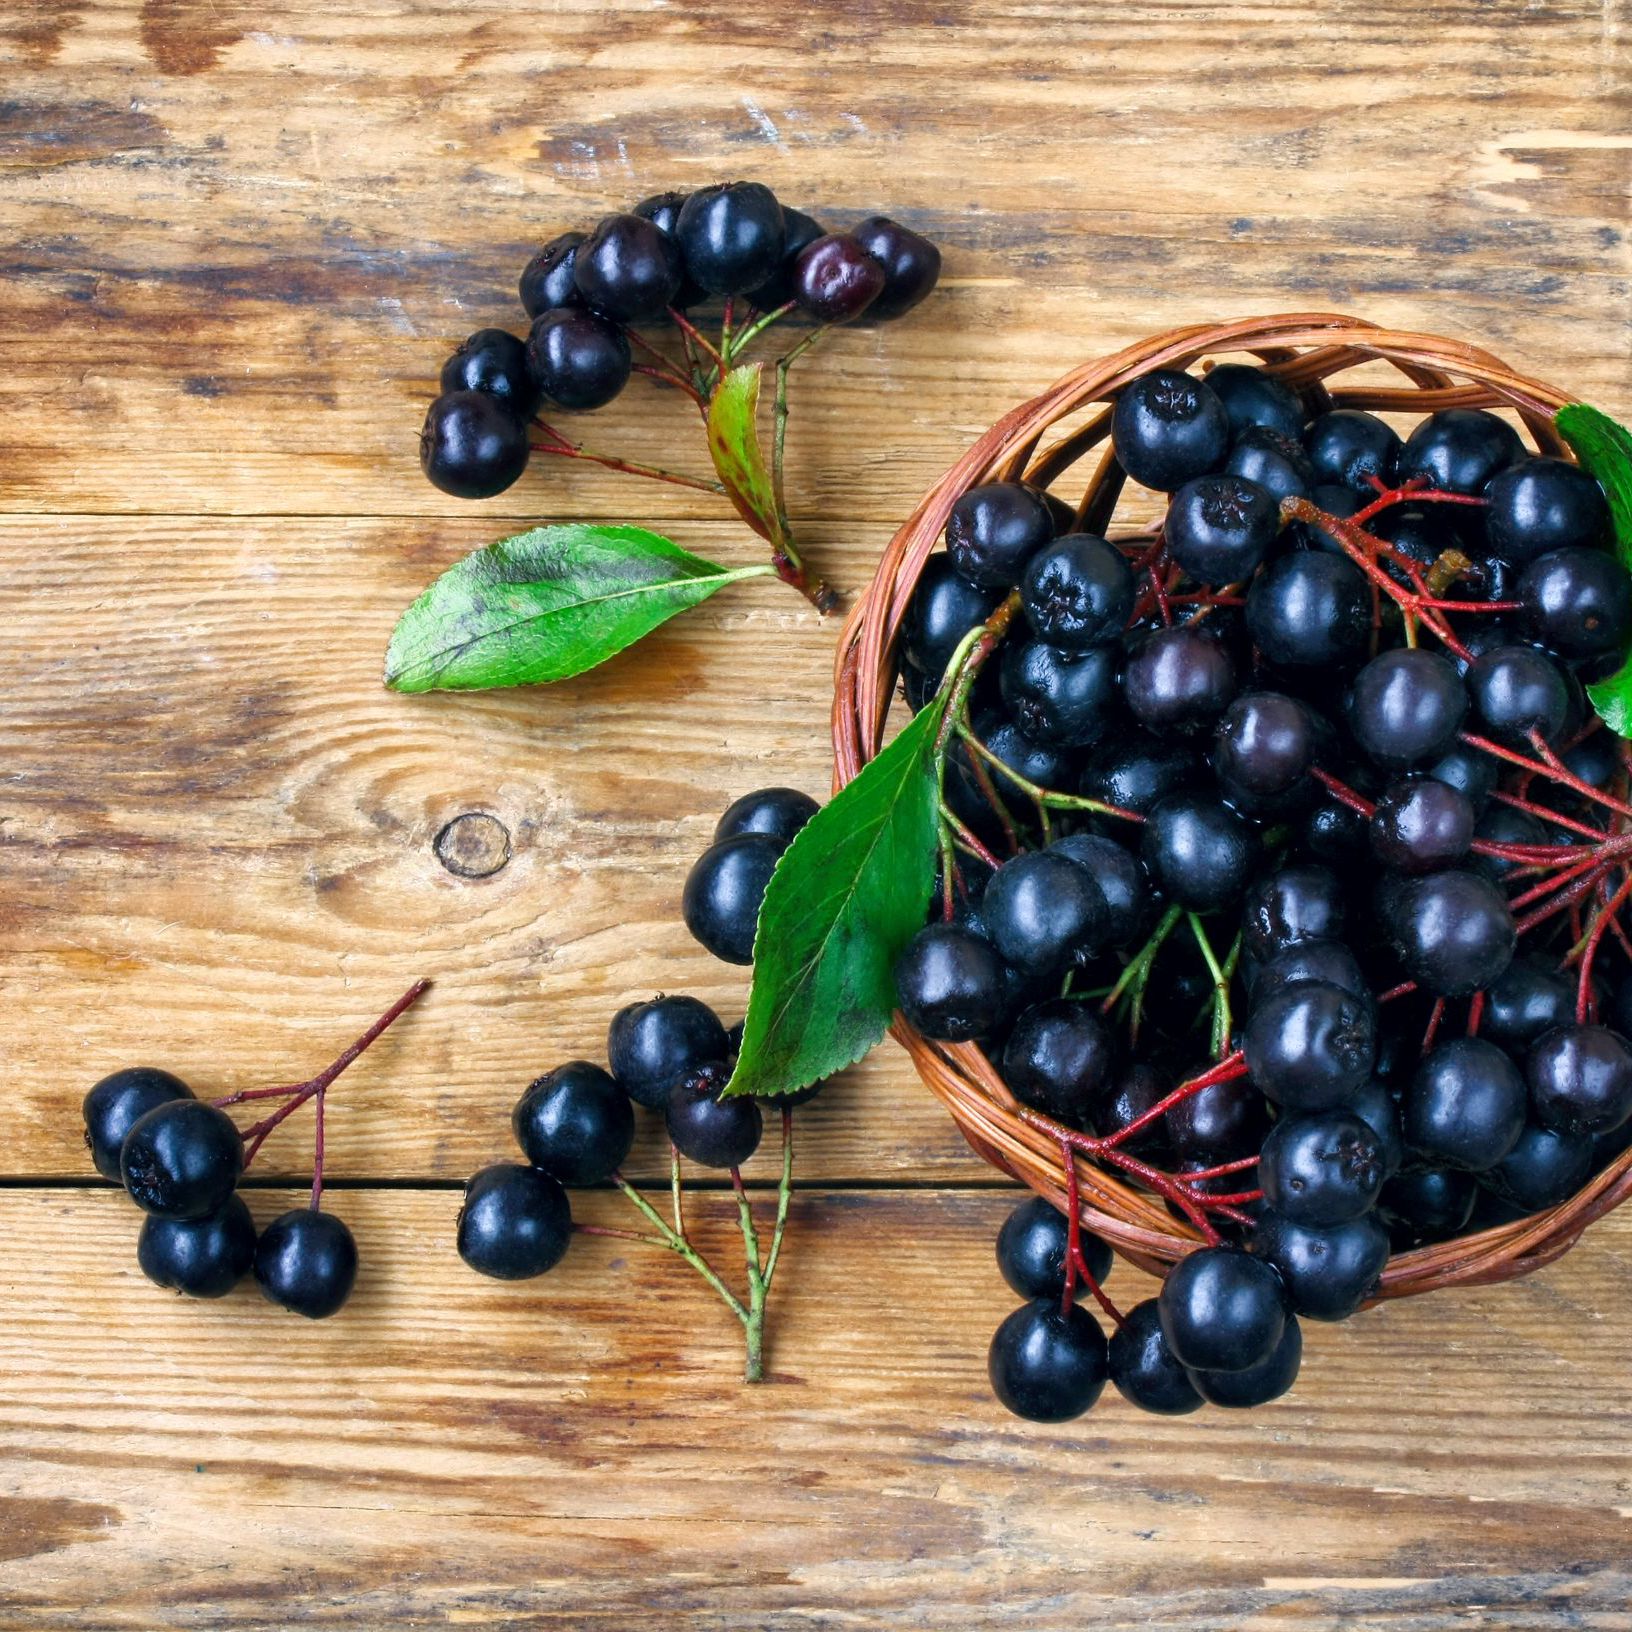 Antioxidant Fruits: Nature’s free radical scavengers